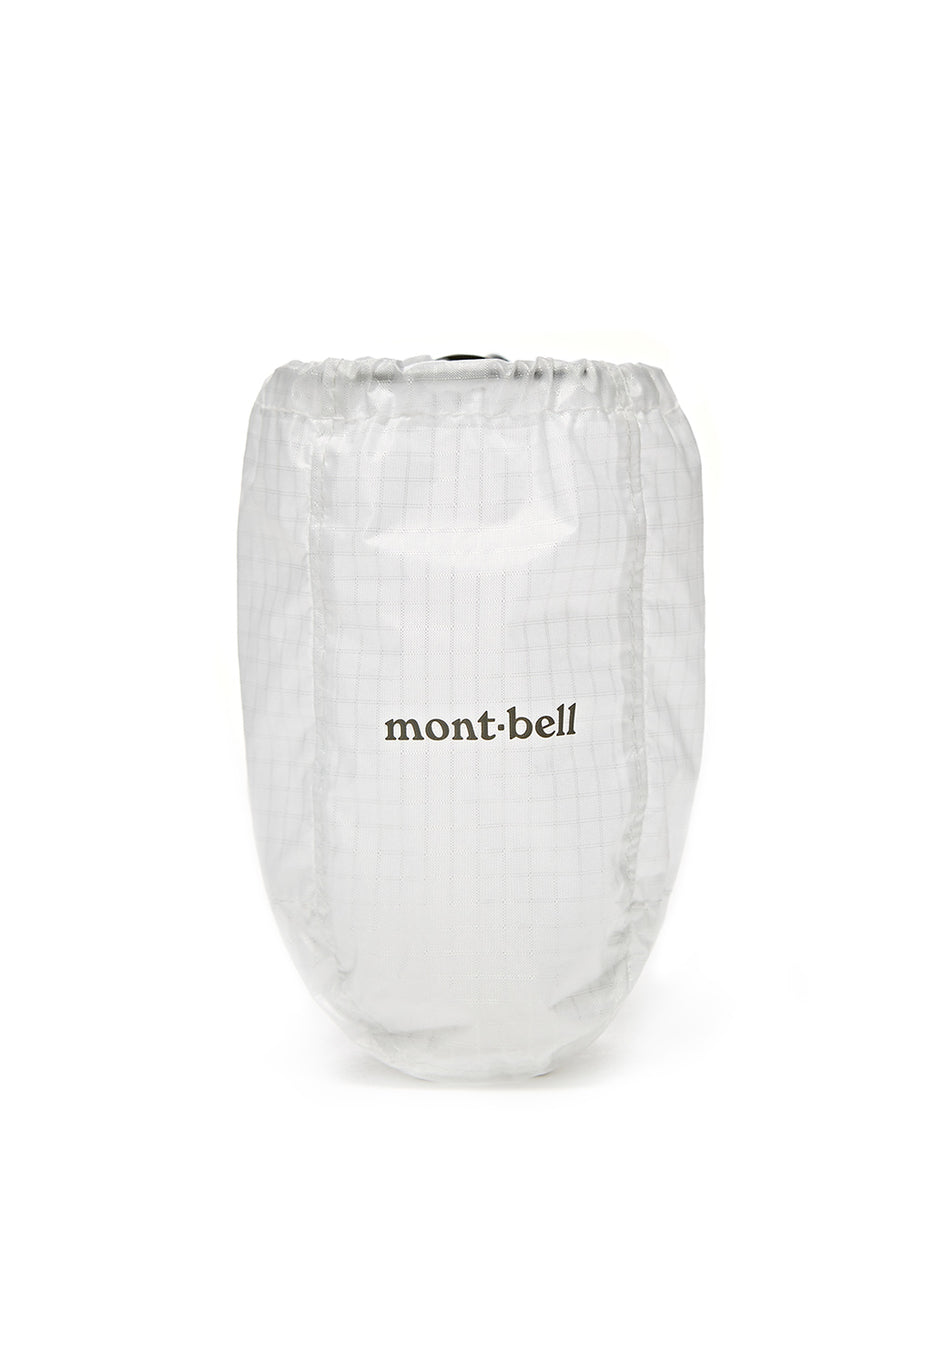 Montbell Crushable Lantern Shade - Medium 0